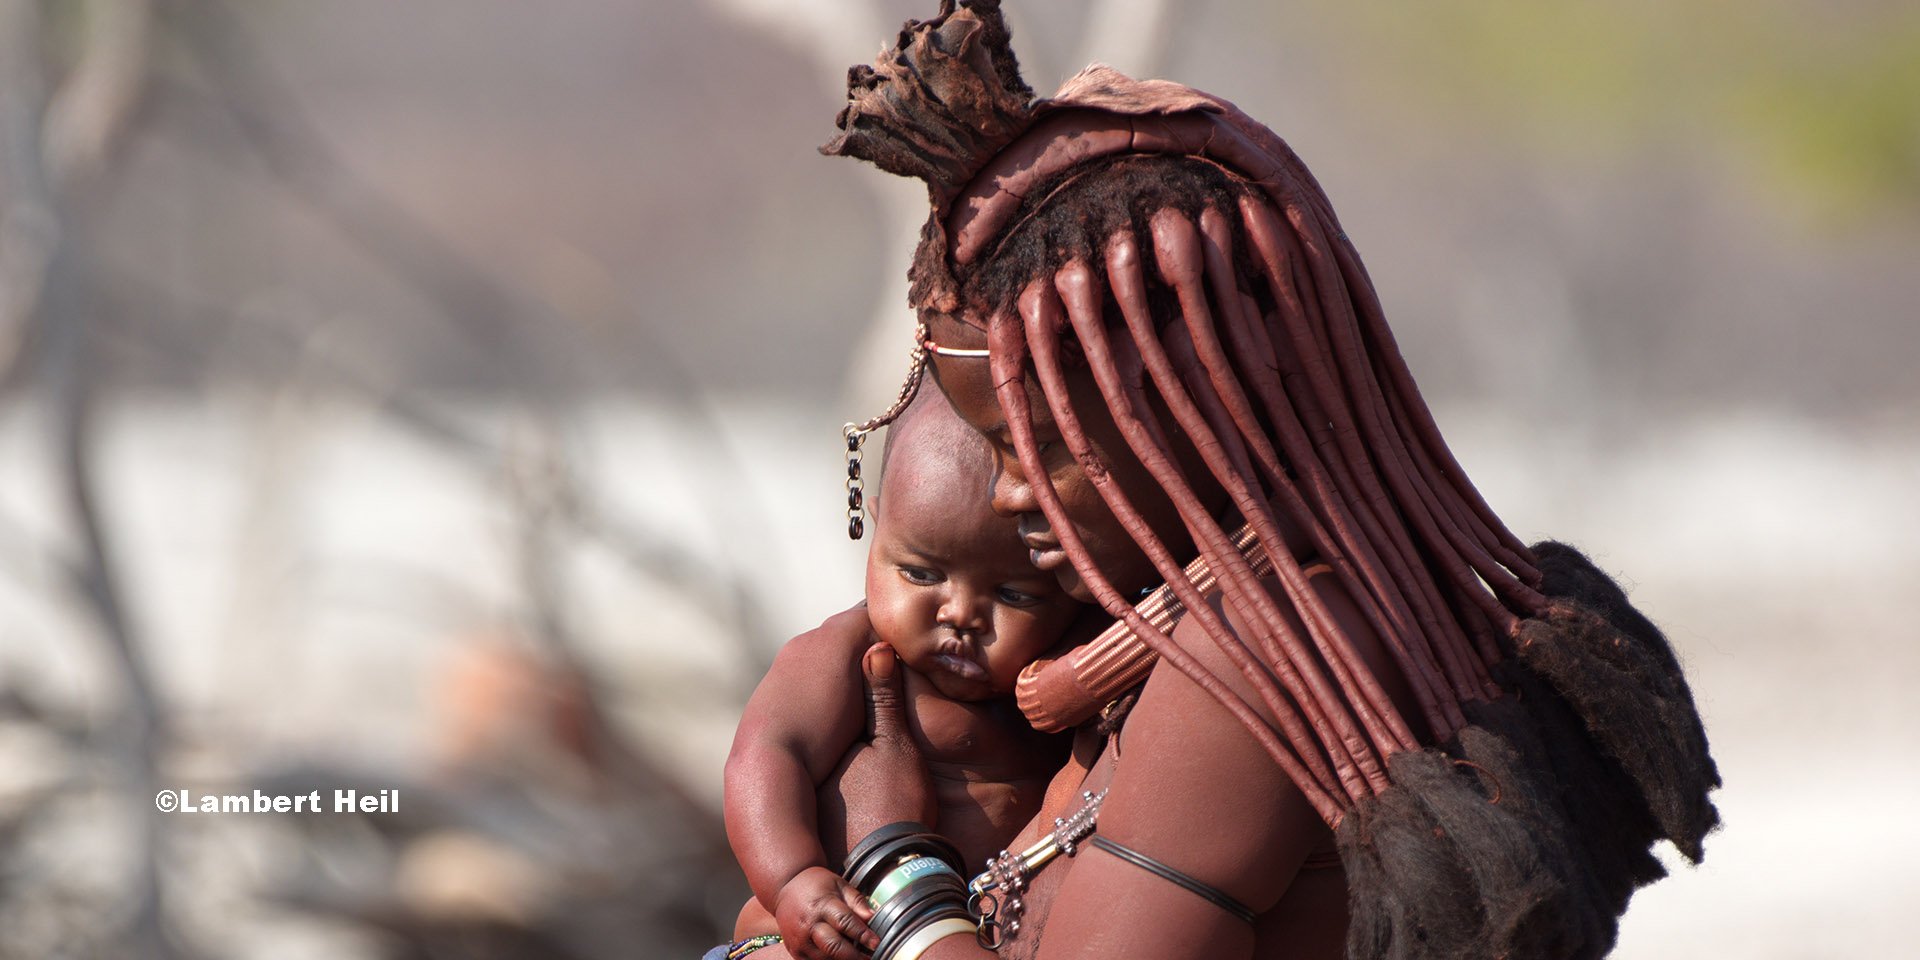 Himba woman and child, Namibia